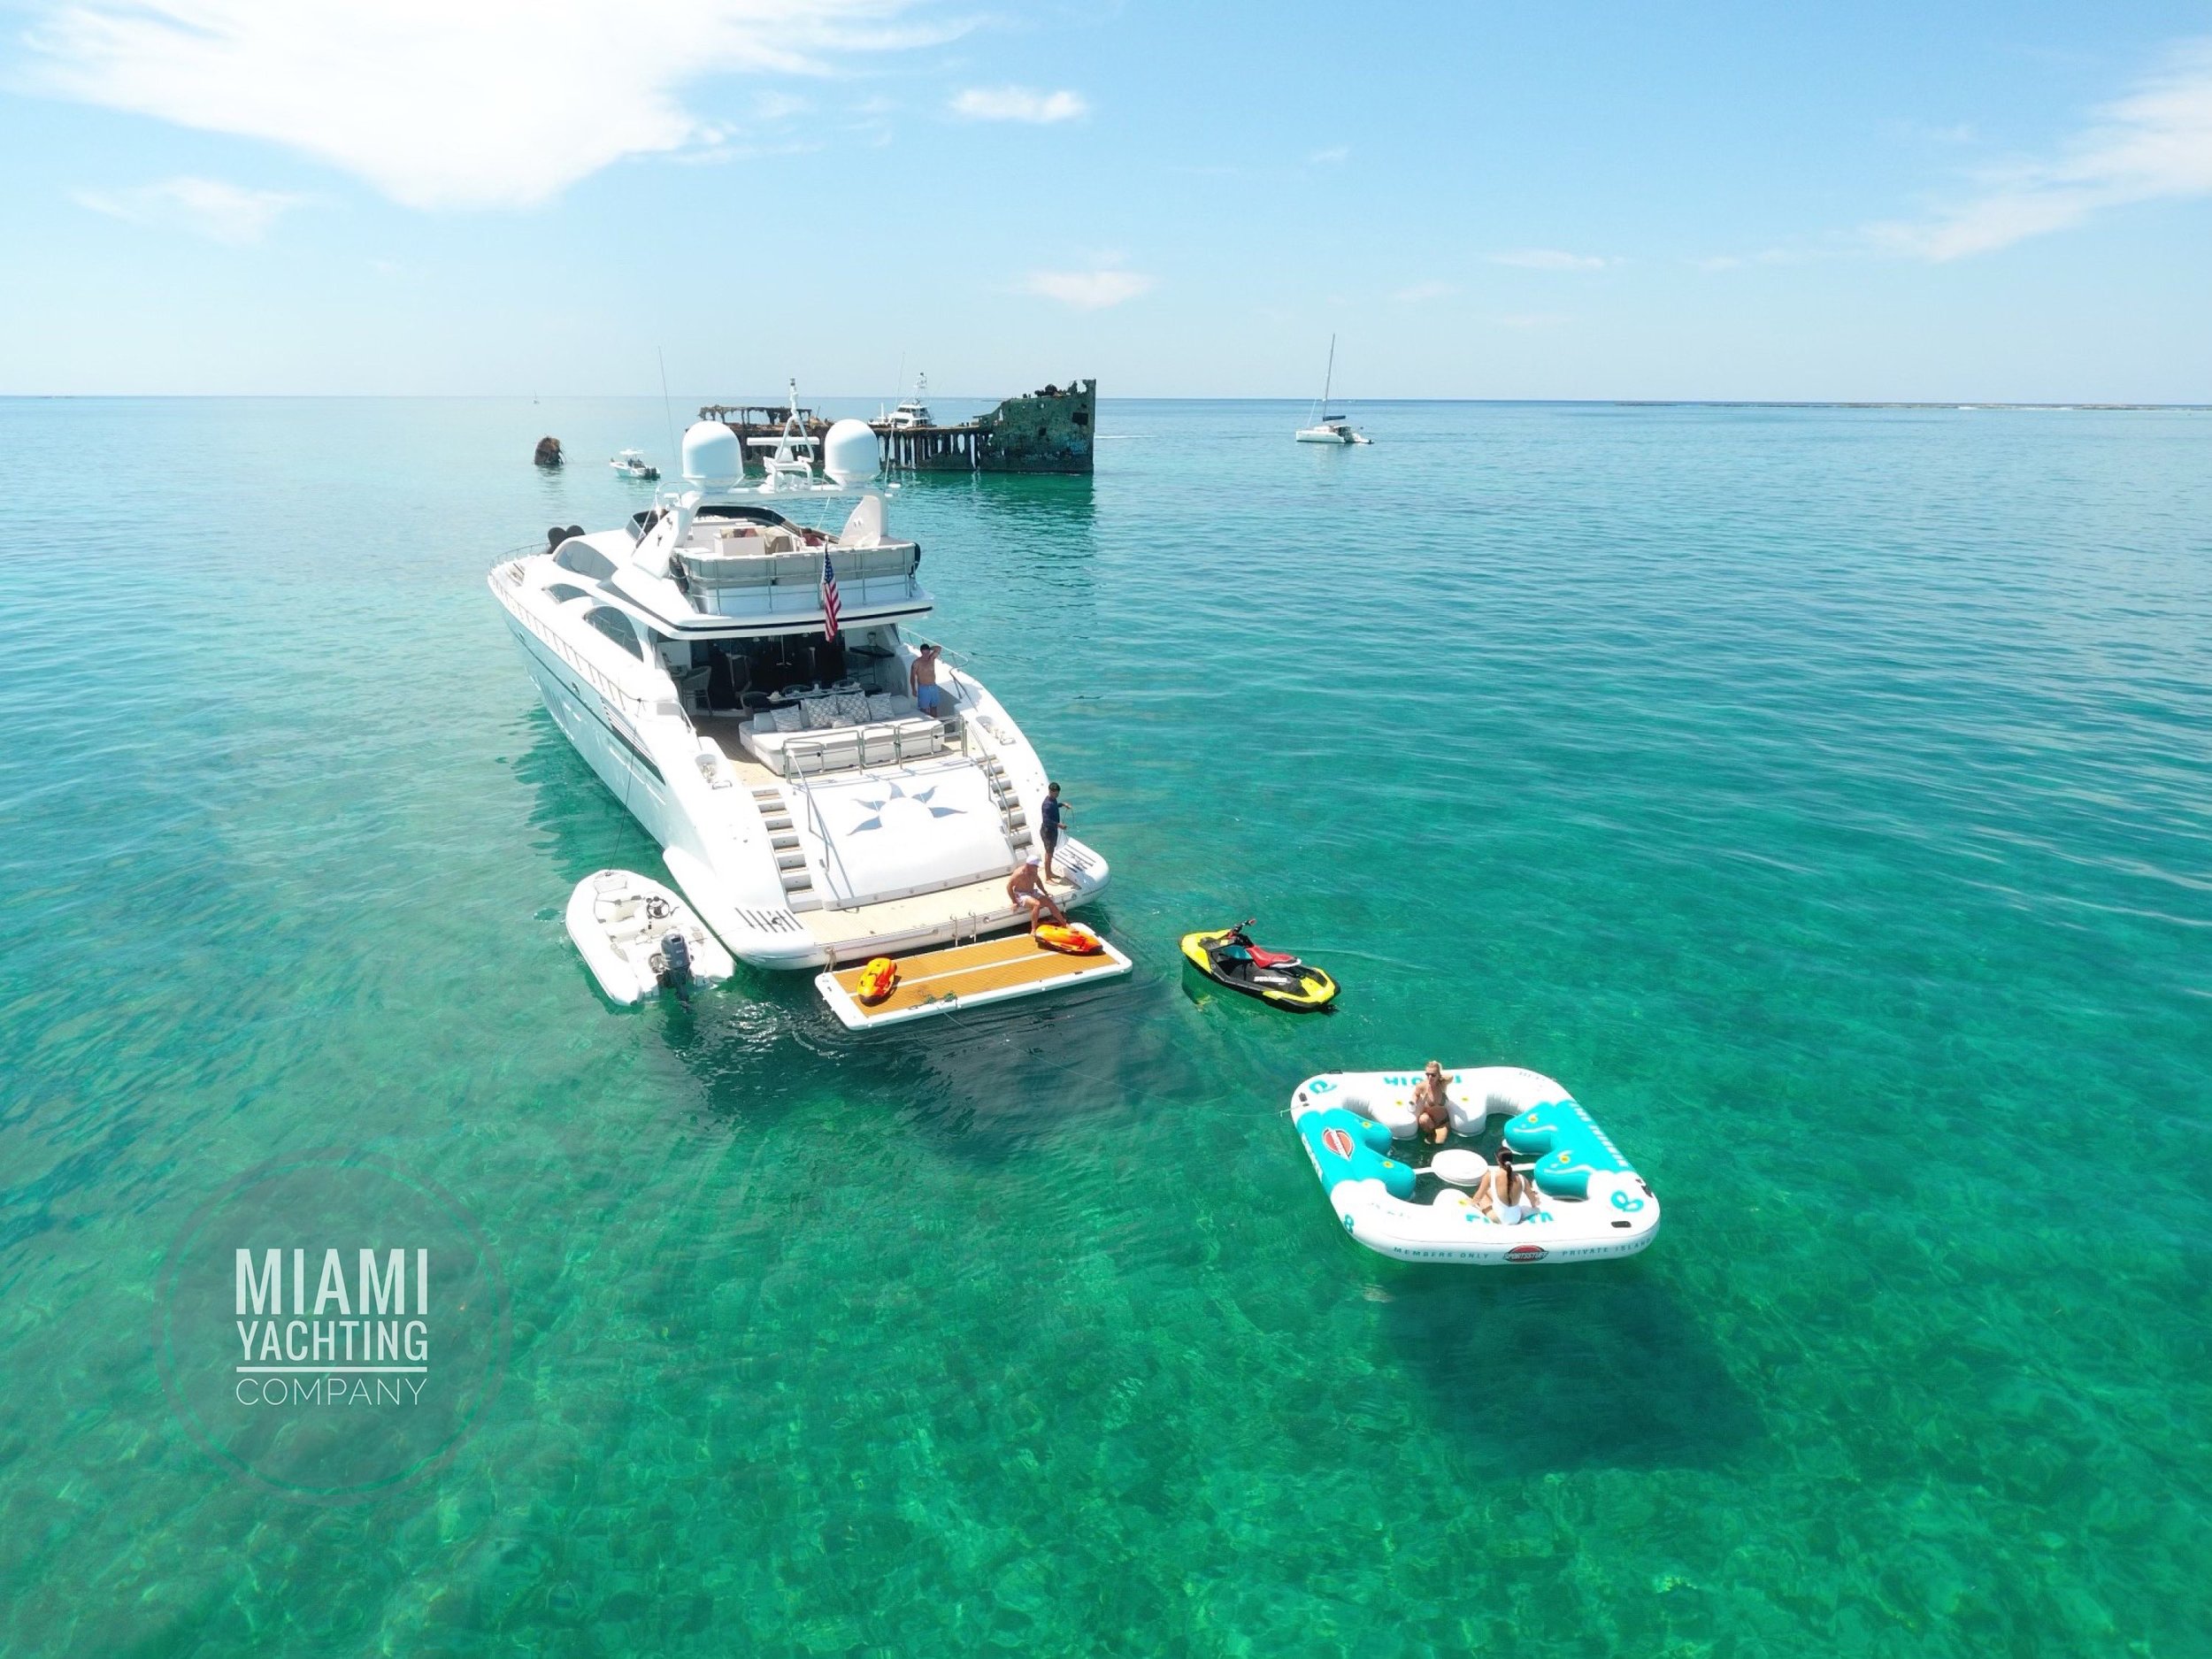 Miami_Yachting_Company_105_leopard1000.jpeg